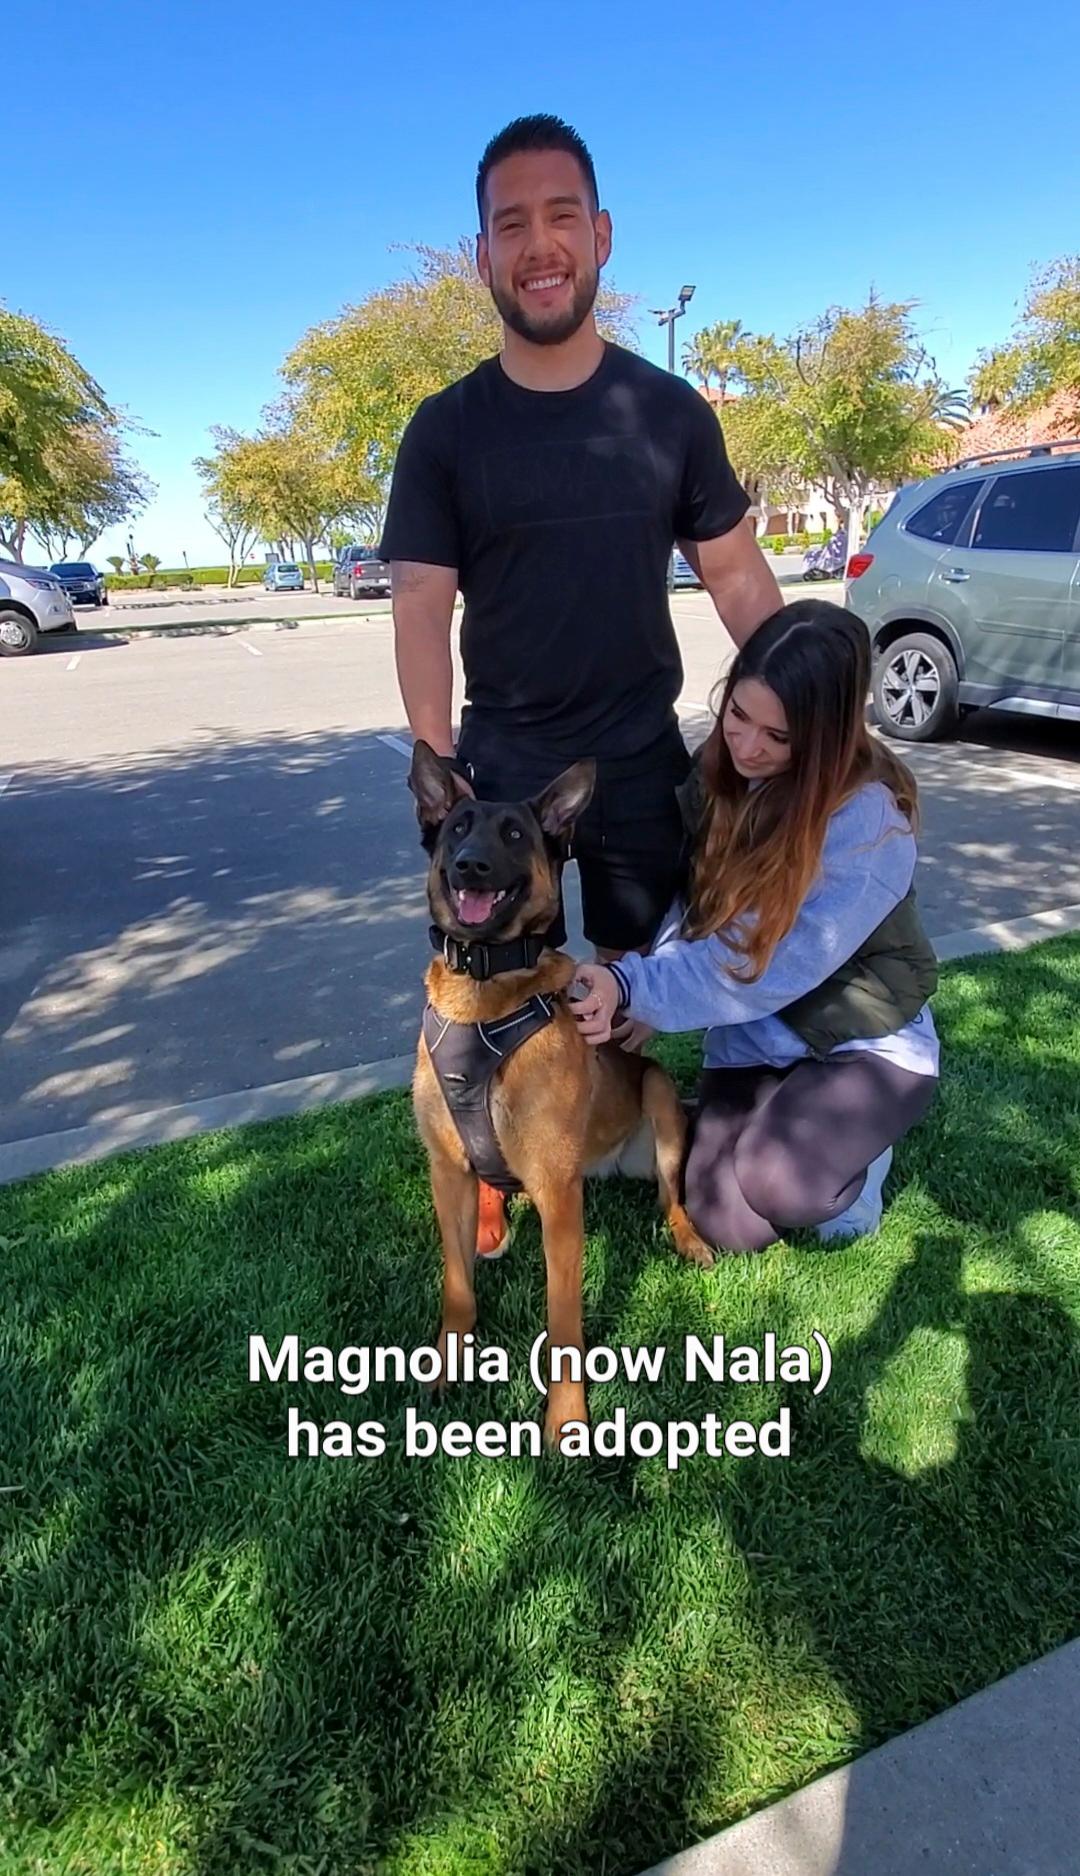 Magnolia, now Nala, with her new owners. (Courtesy of Sahari Salazar)